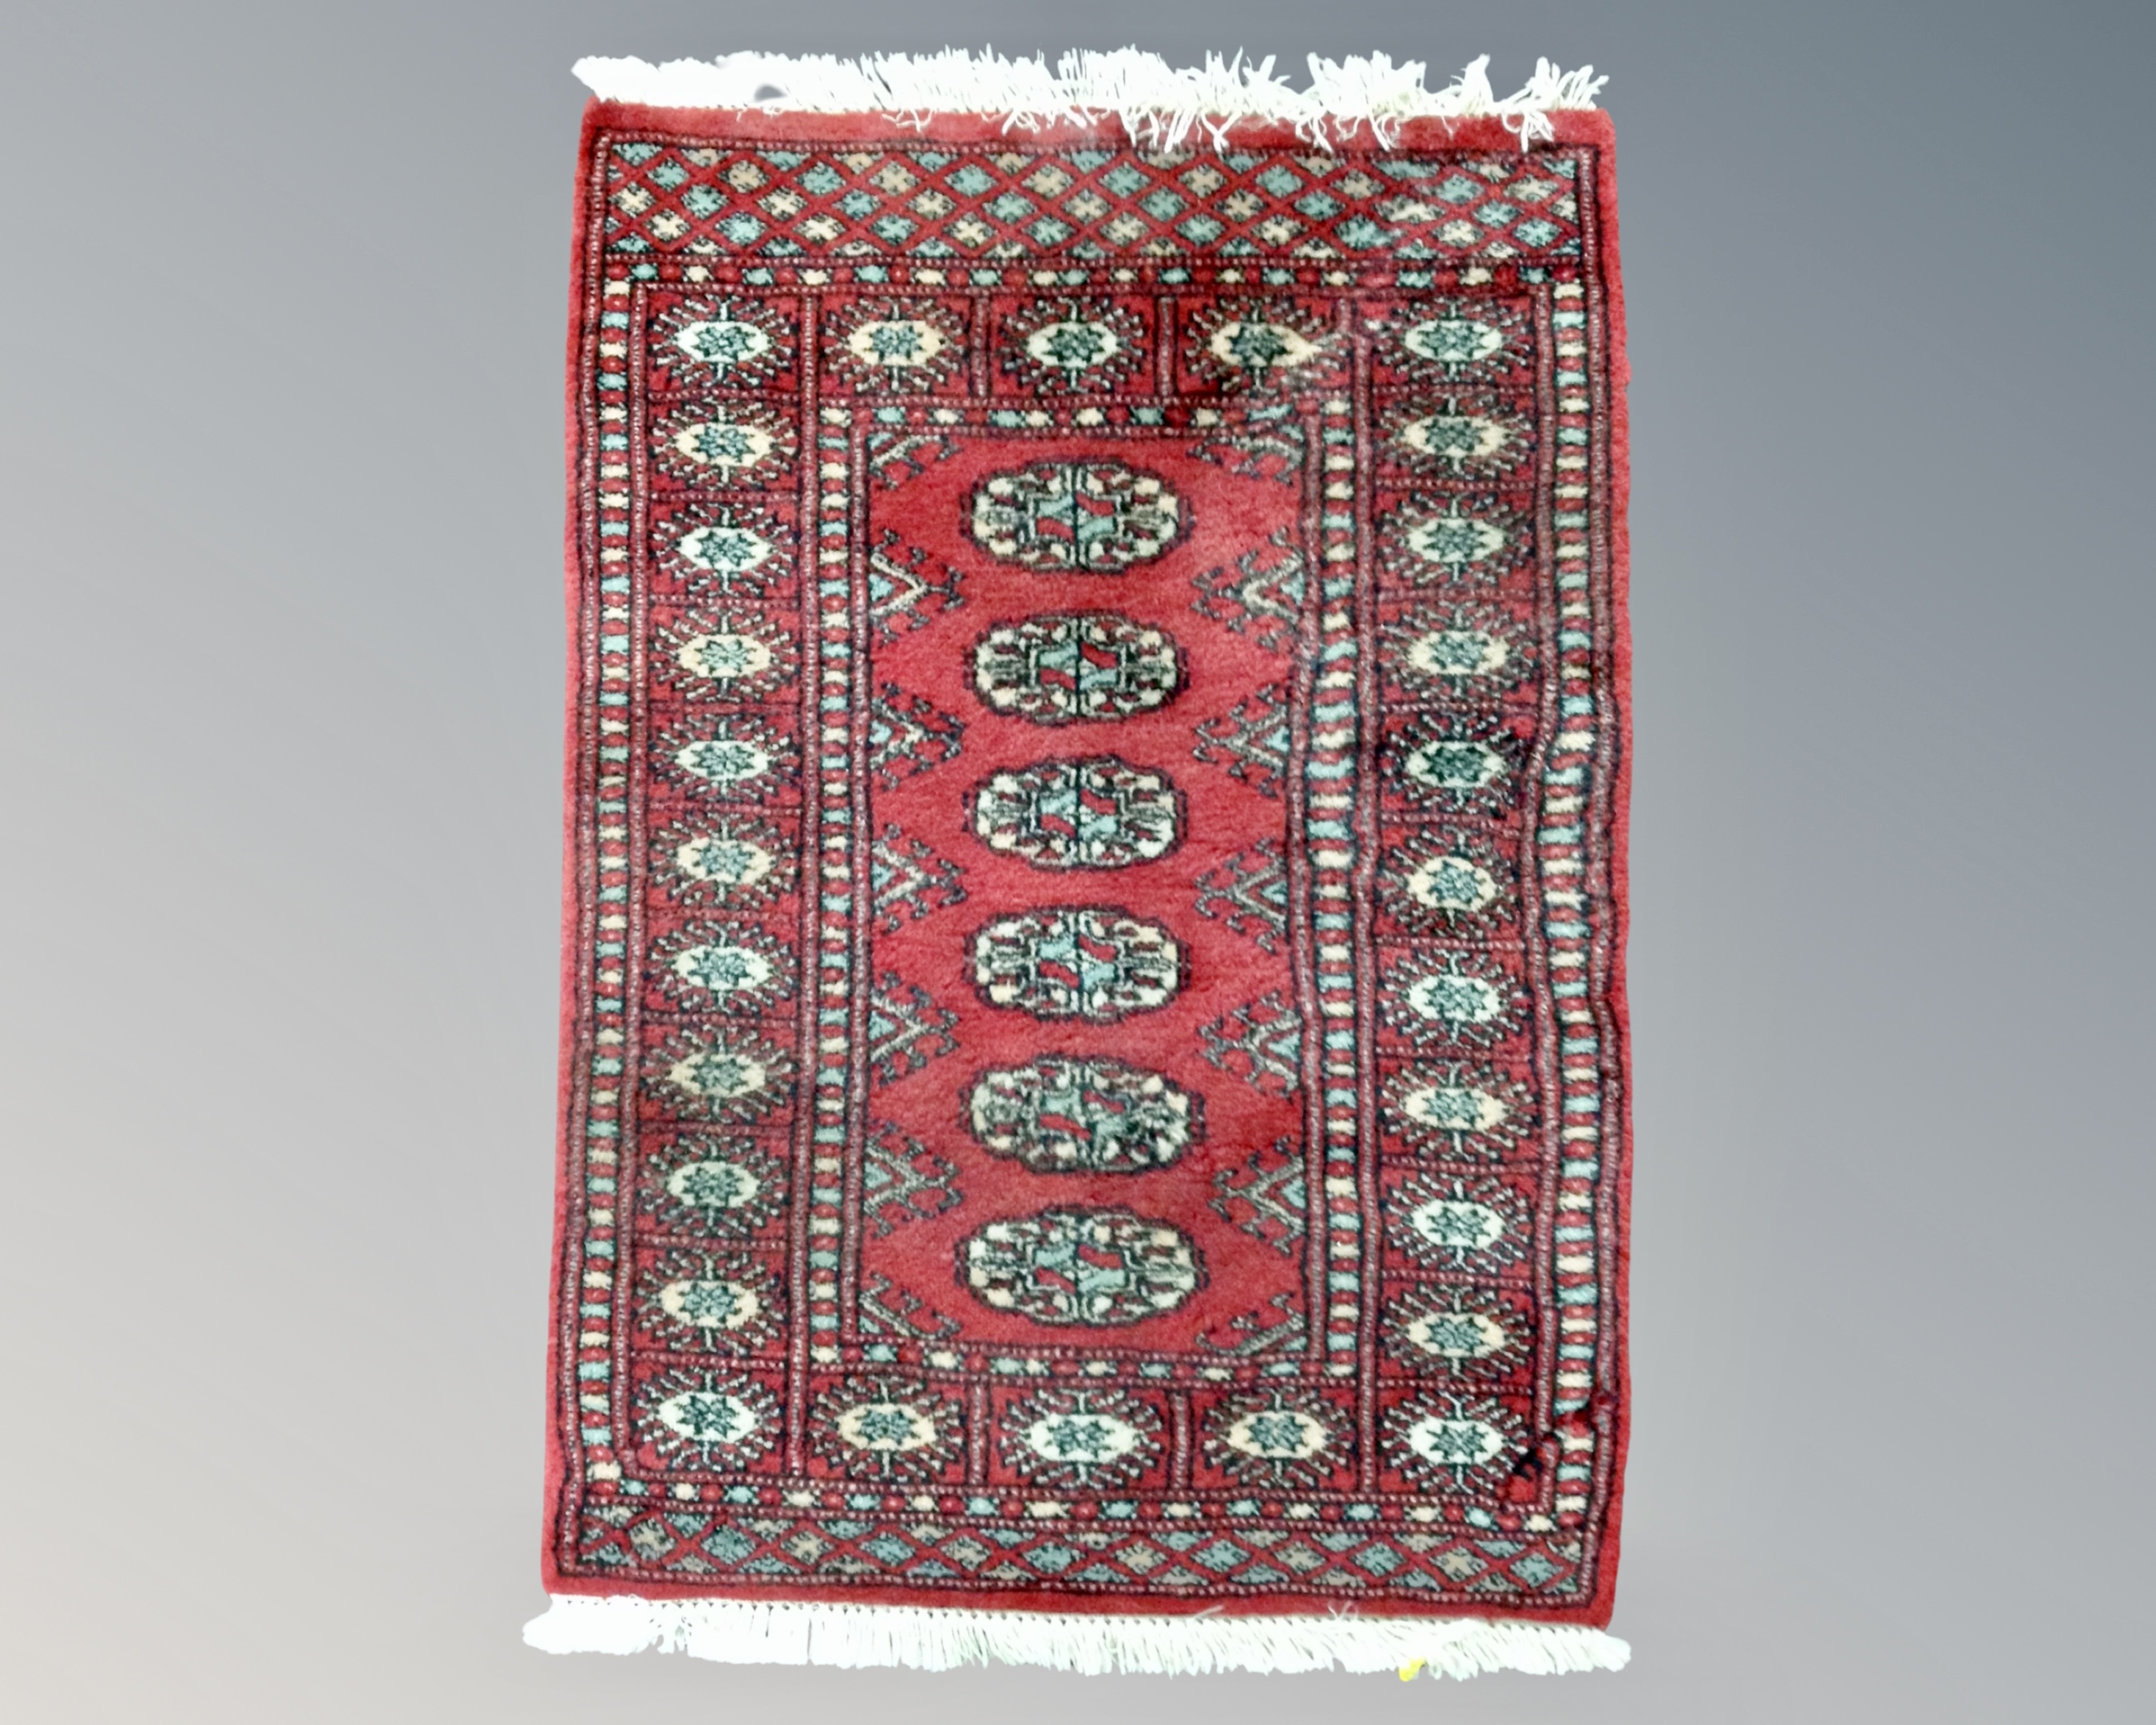 An Afgan Bokhara rug on red ground 98 cm x 66 cm